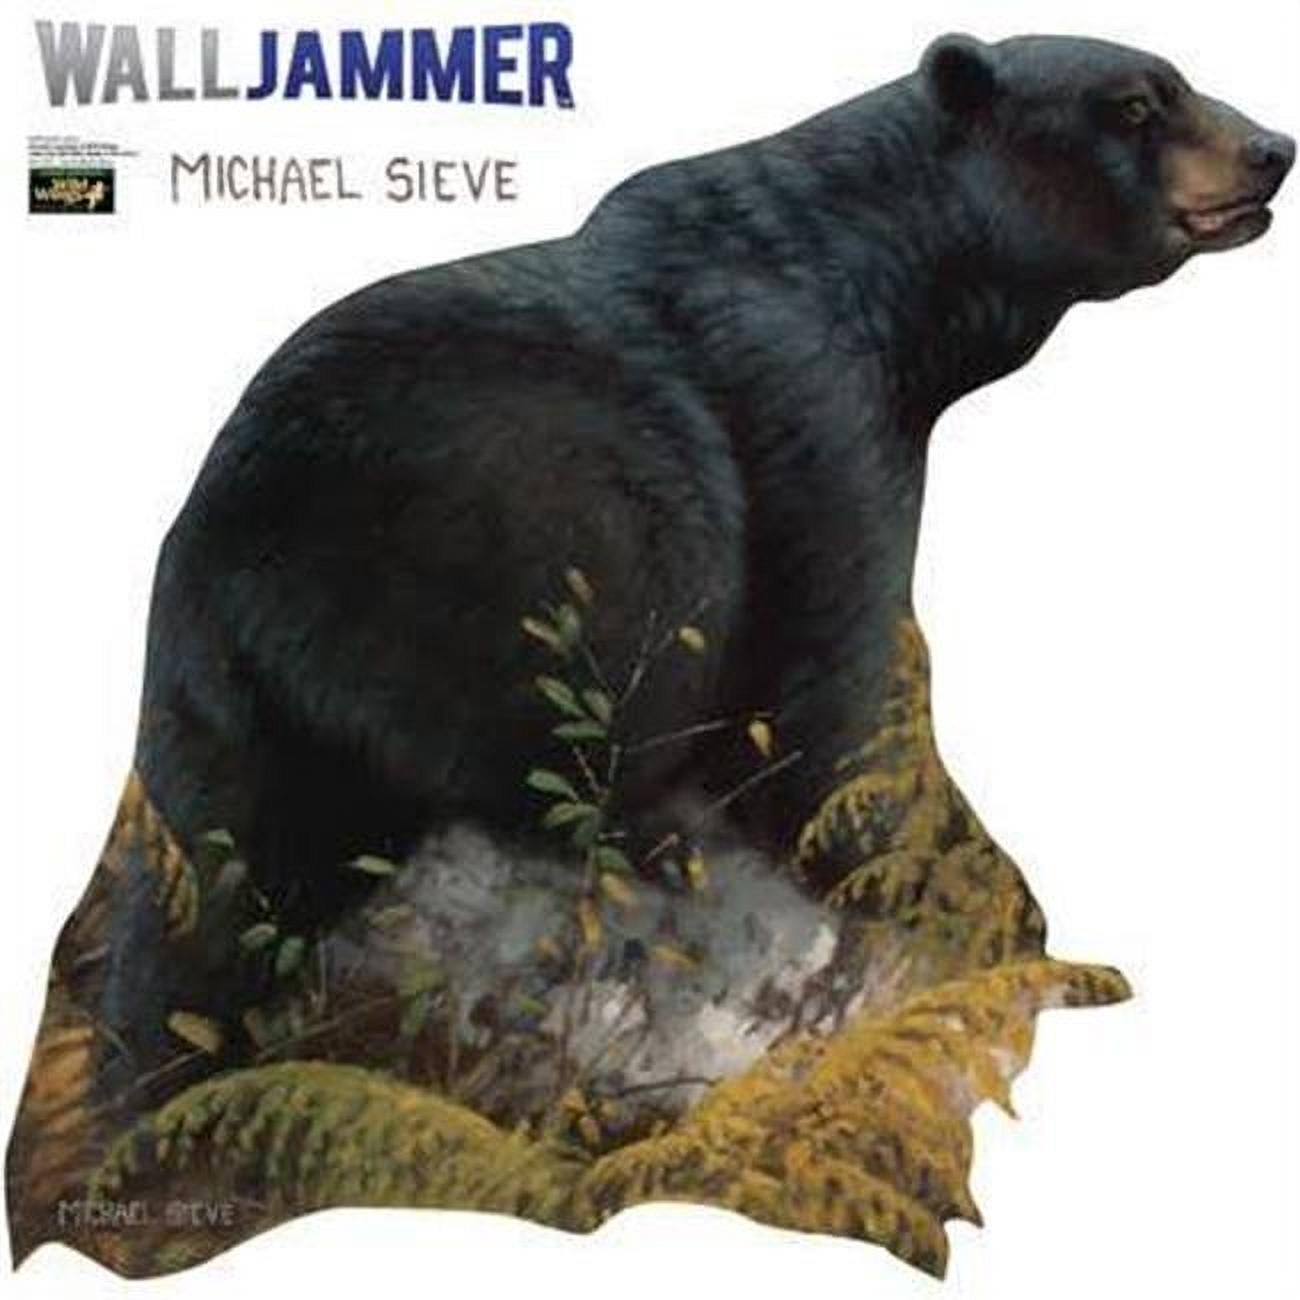 Wj1201 24 In. Black Bear Wall Decal